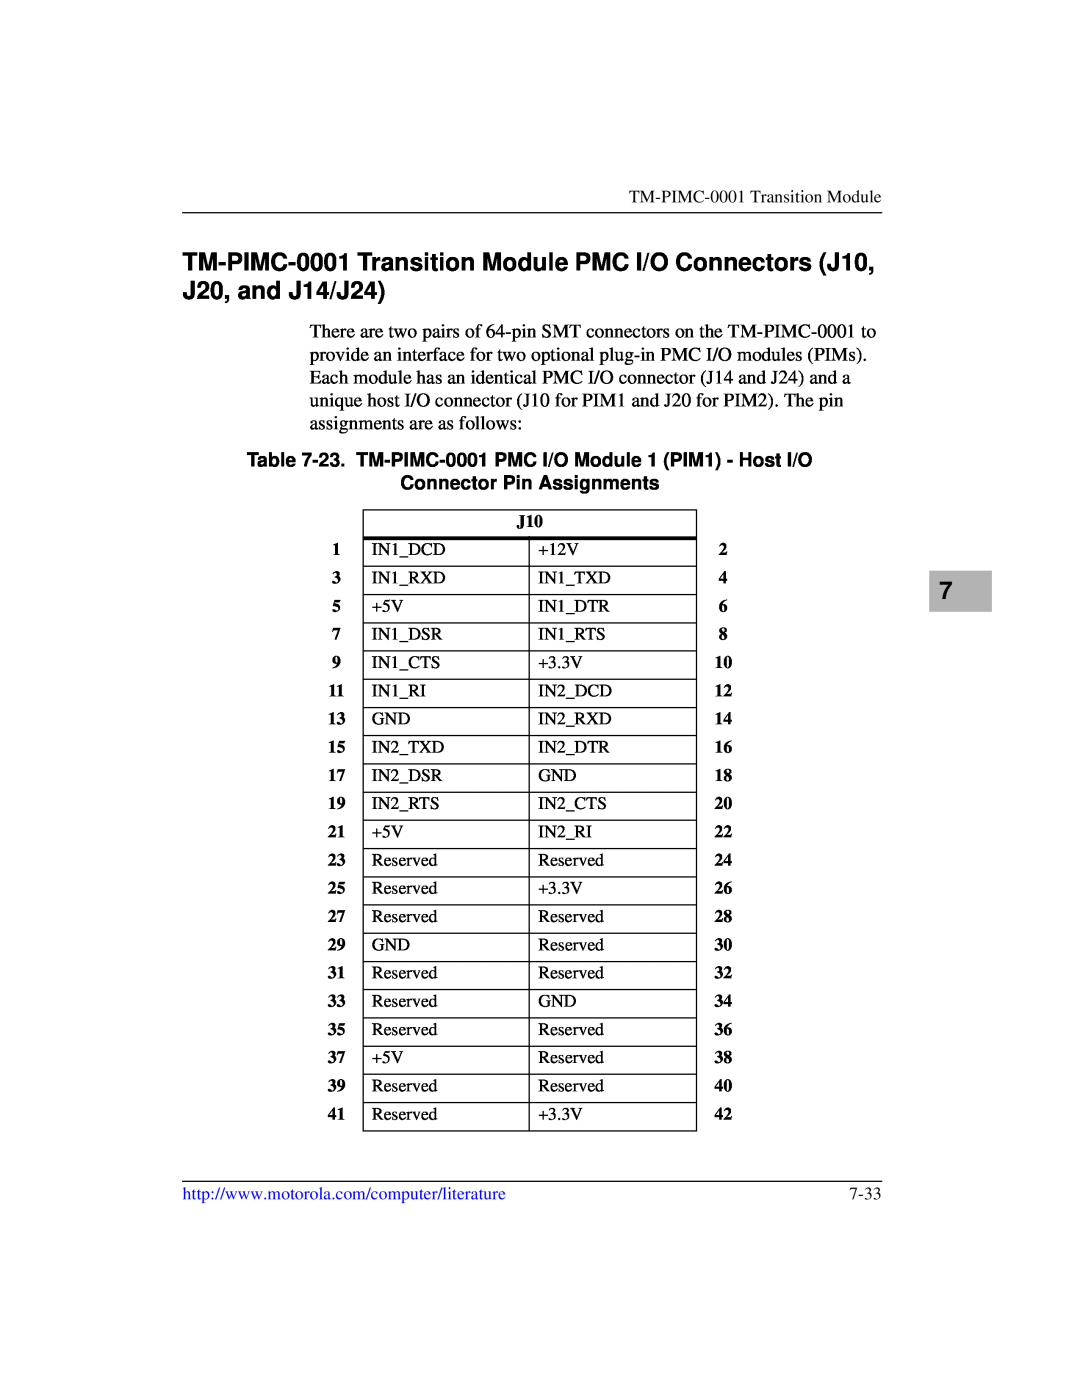 Motorola IH5, MCPN750A manual 23. TM-PIMC-0001 PMC I/O Module 1 PIM1 - Host I/O, Connector Pin Assignments 